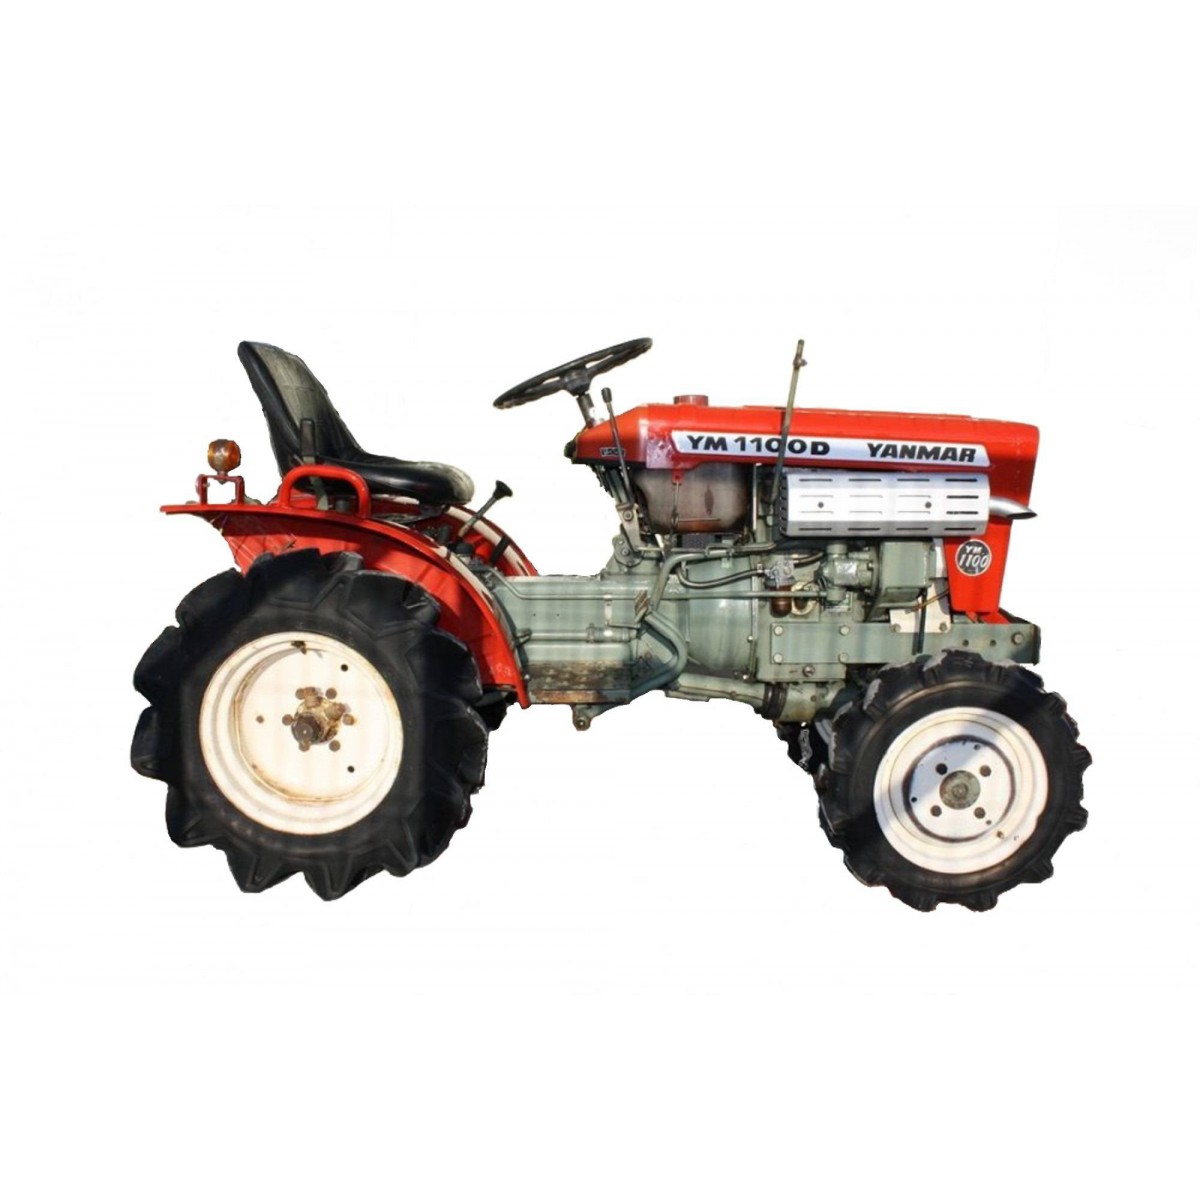 Used parts fot tractors Hinomoto C174 C144